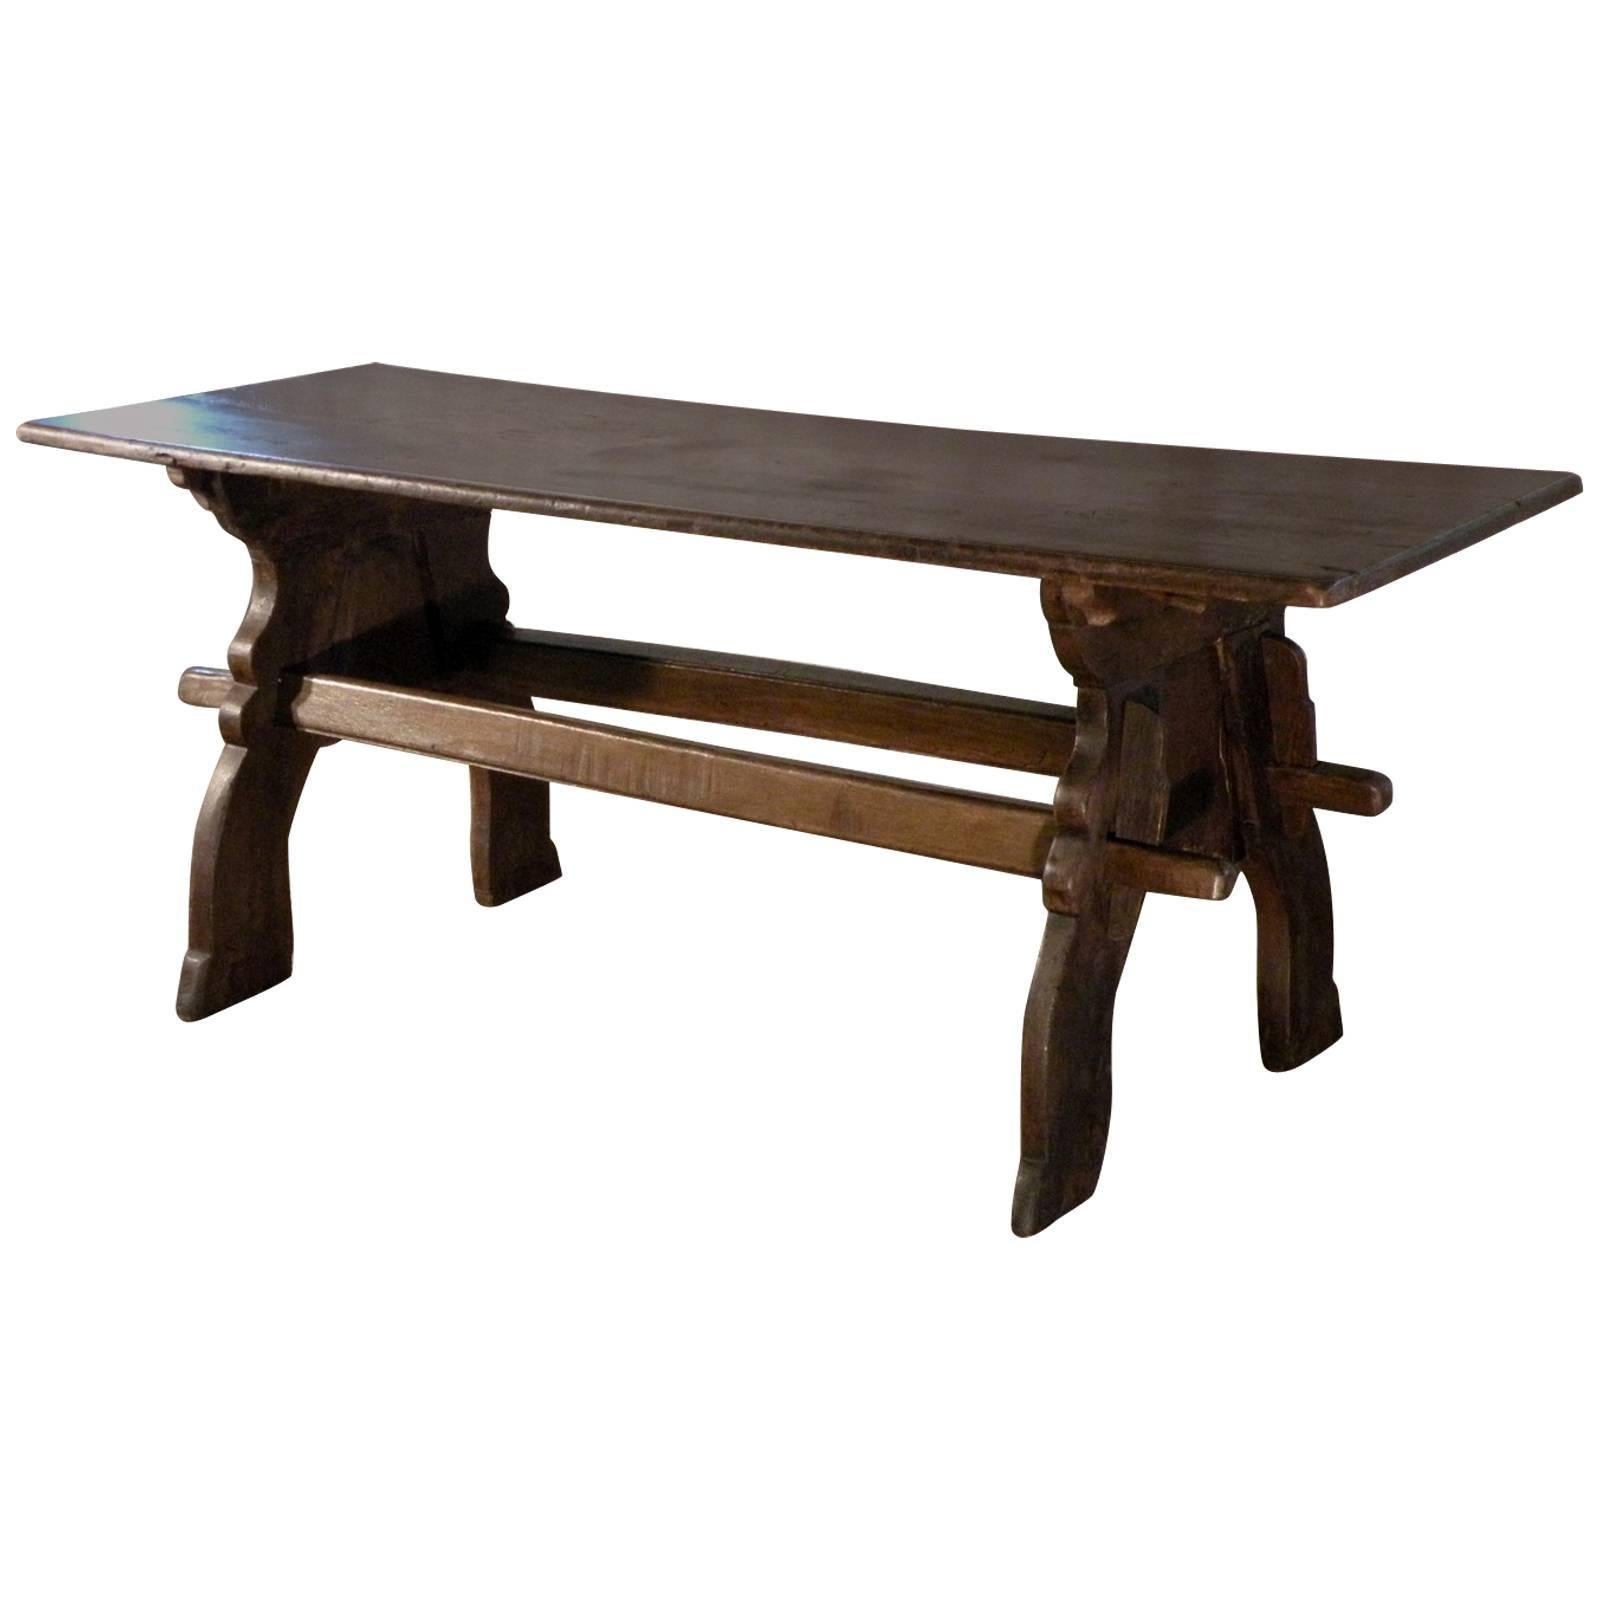 Late Gothic 16th century North European Oak Trestle Table